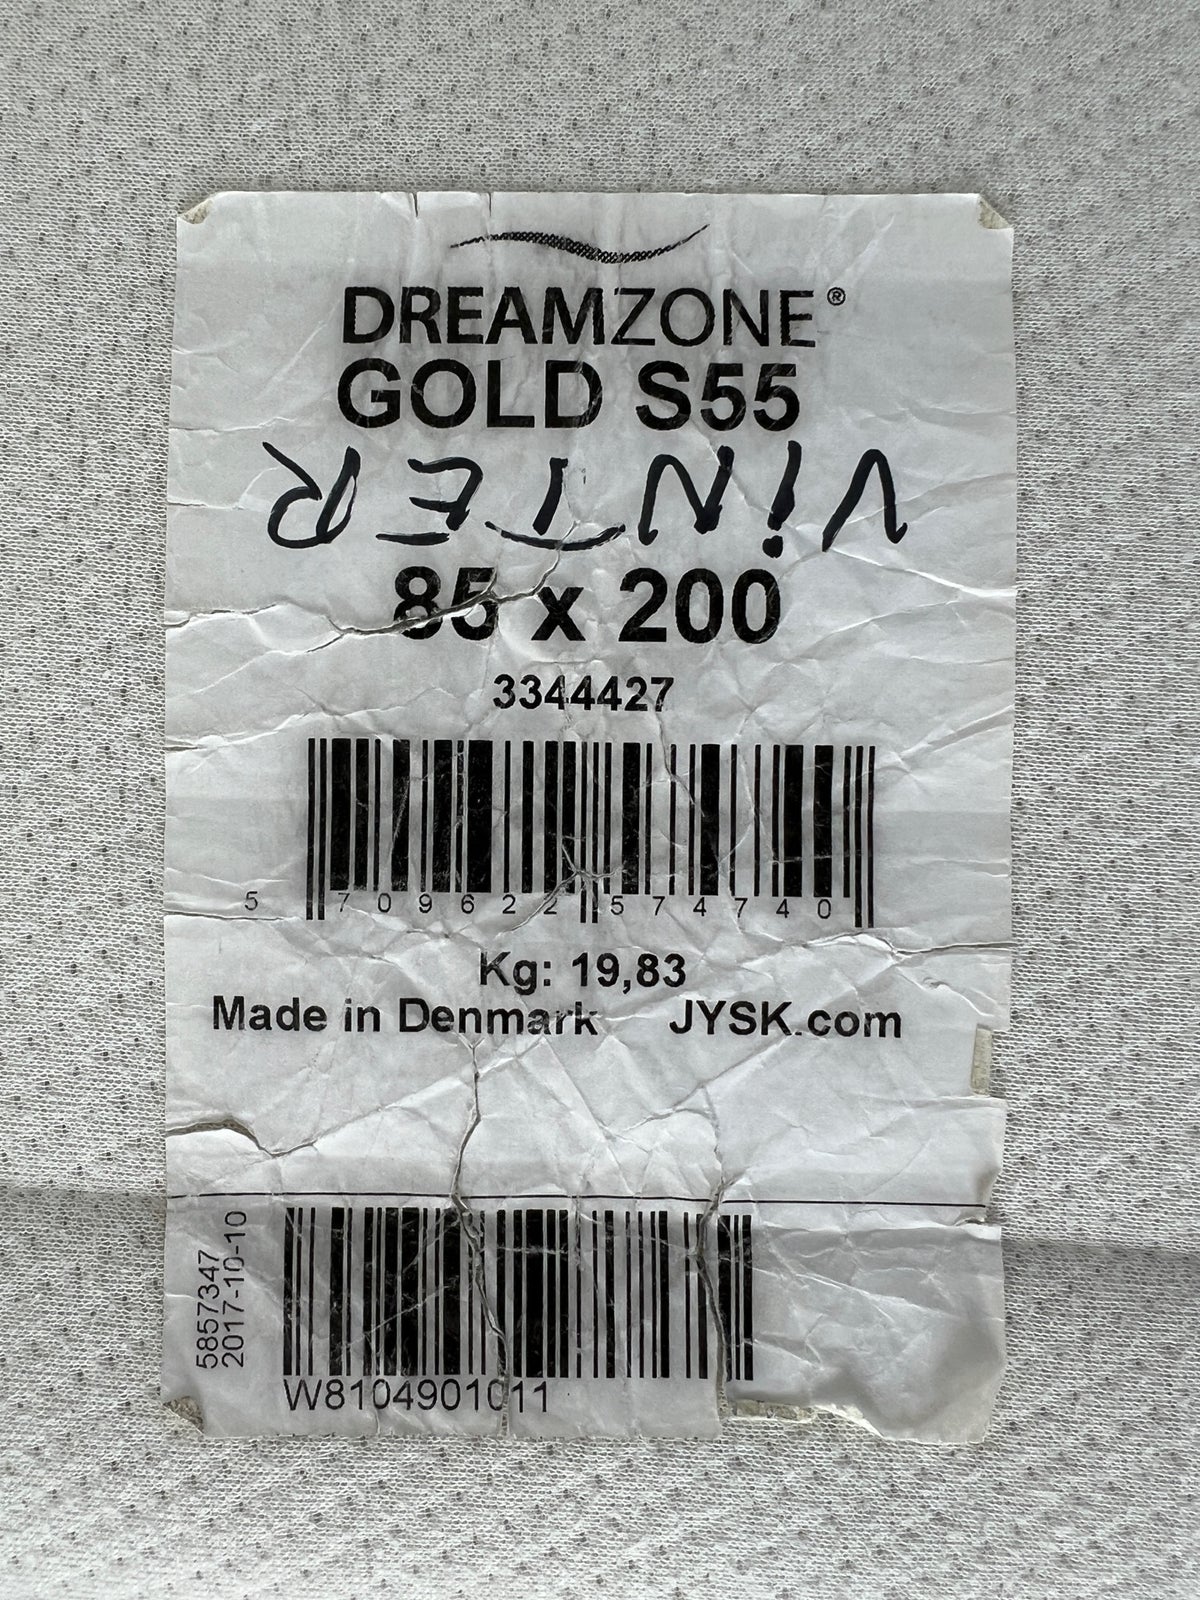 Springmadras, DREAMZONE GOLD S55, b: 85 l: 200 h: 22